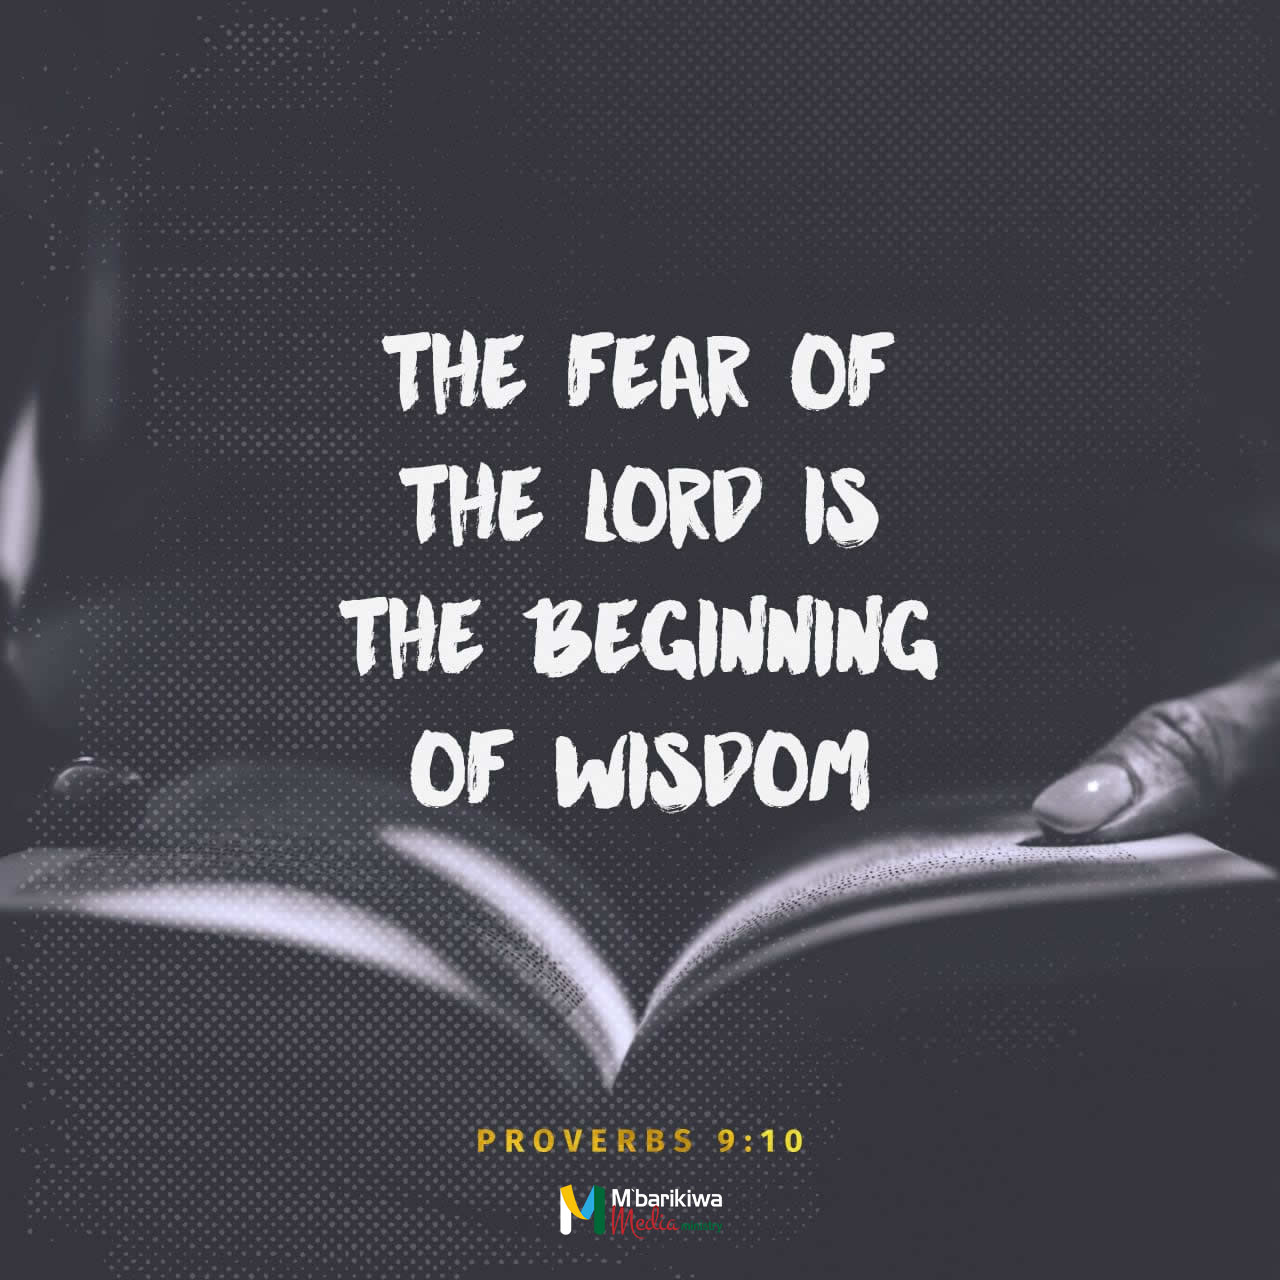 Proverbs 9:10 (NIV)